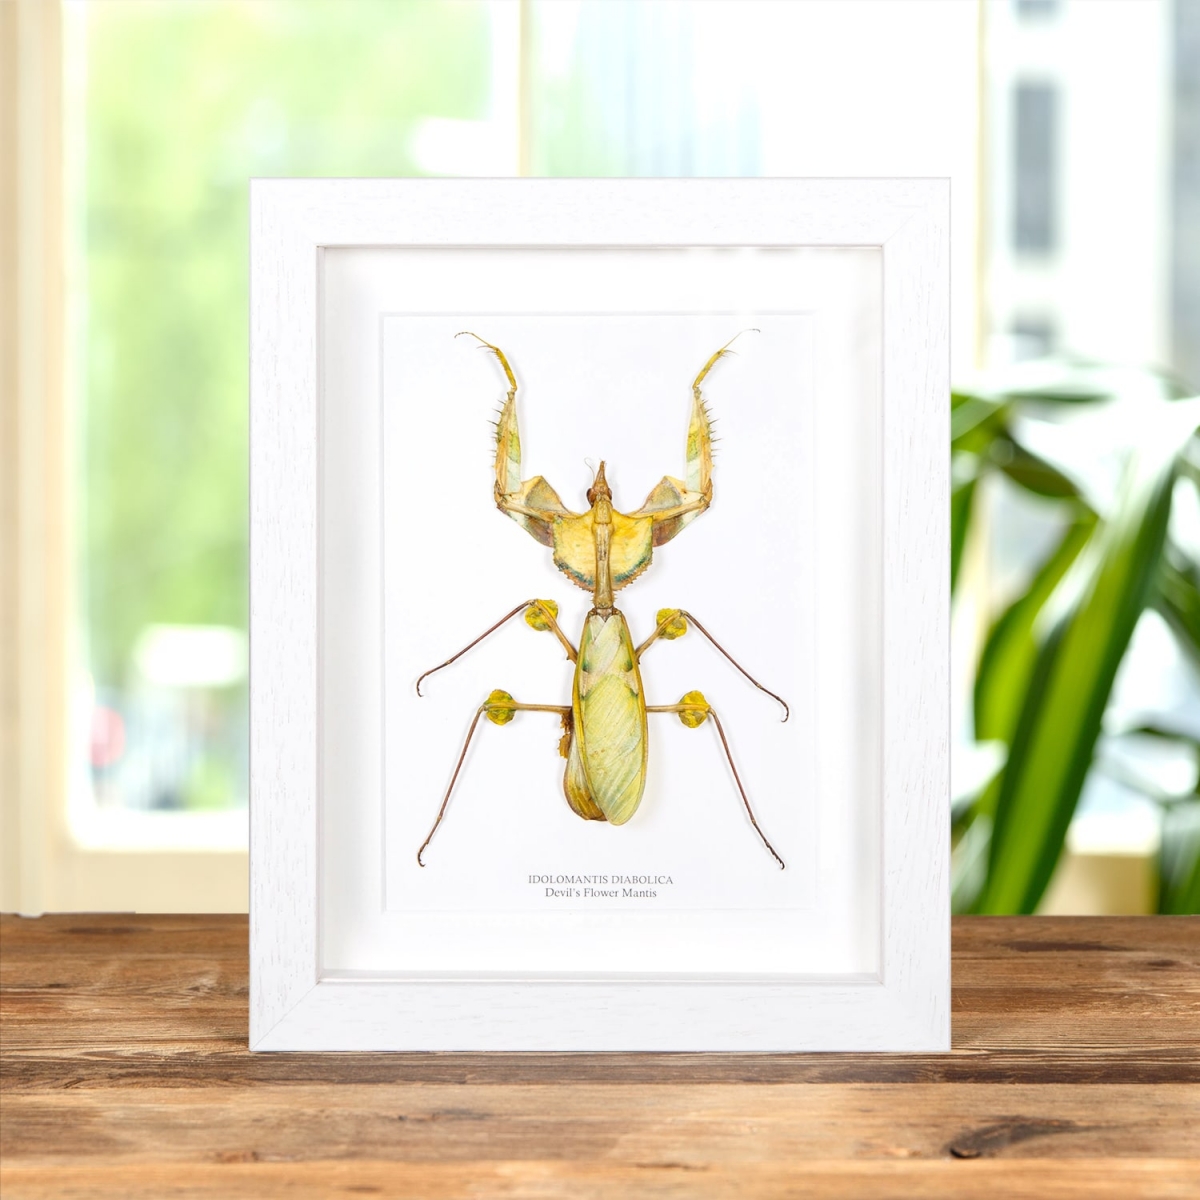 Devil's Flower Mantis in Box Frame (Idolomantis diabolica)